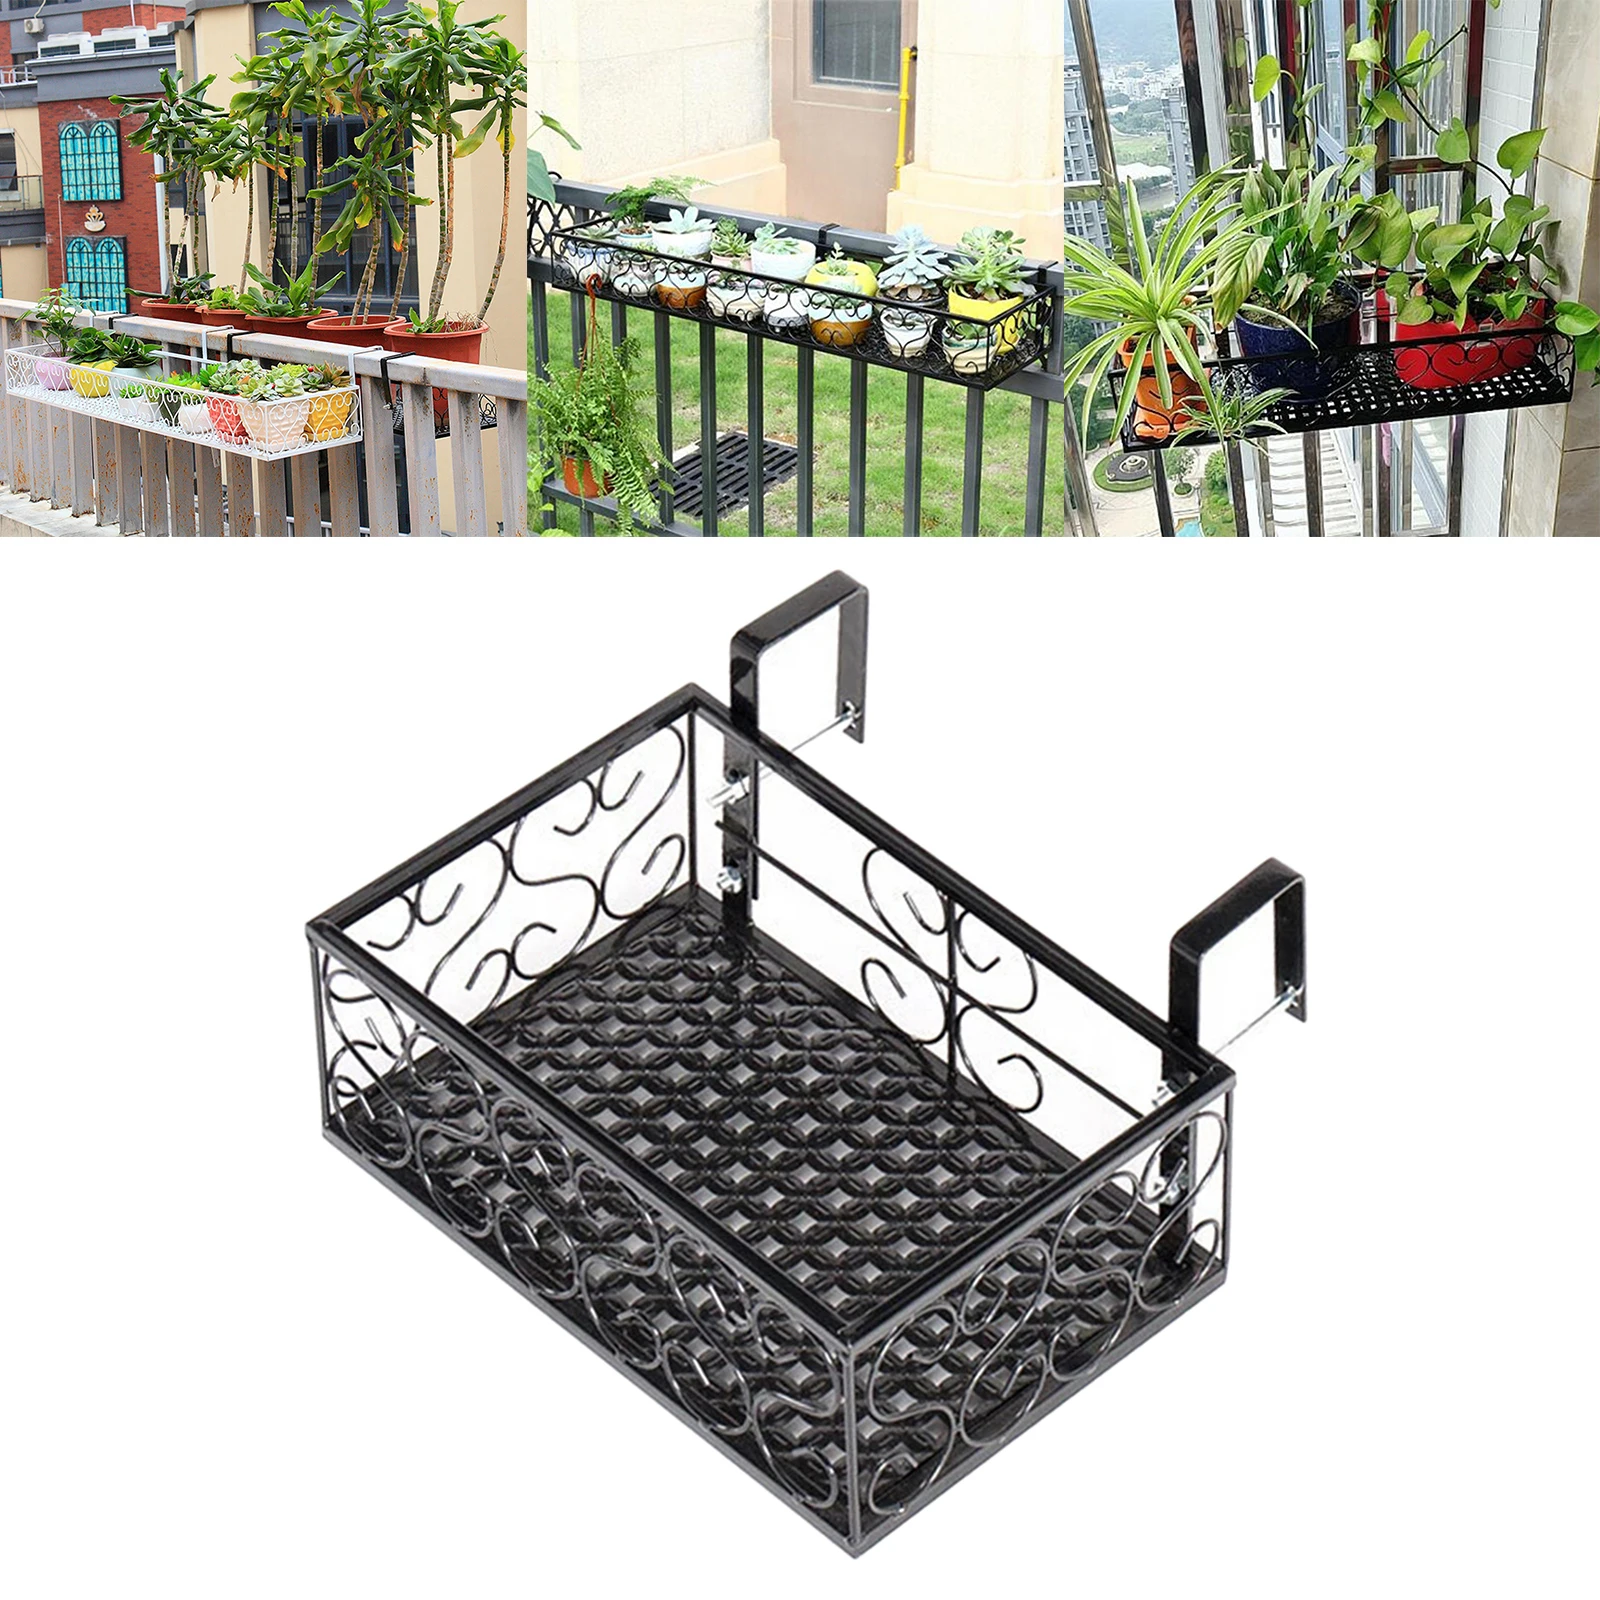 Wrought Iron Metal Planter Railing Shelf Holder er Balcony Yard Fence Flowerpot ing Rack Basket for Porches Patio Home